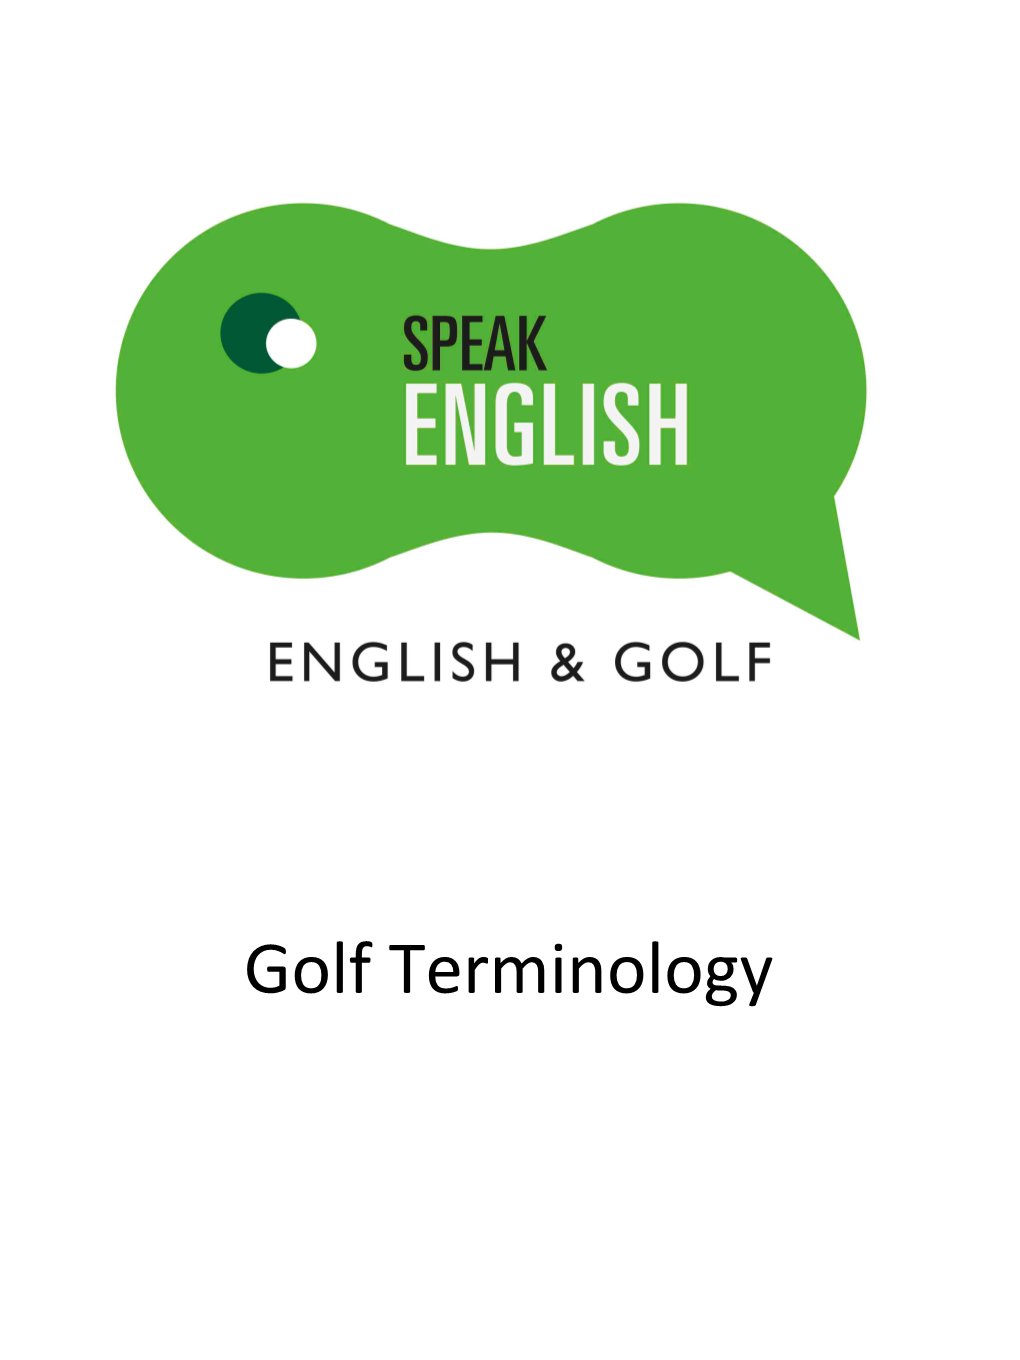 Golf Terminology SPEAK ENGLISH Golf Terminology ENGLISH & GOLF MADRID